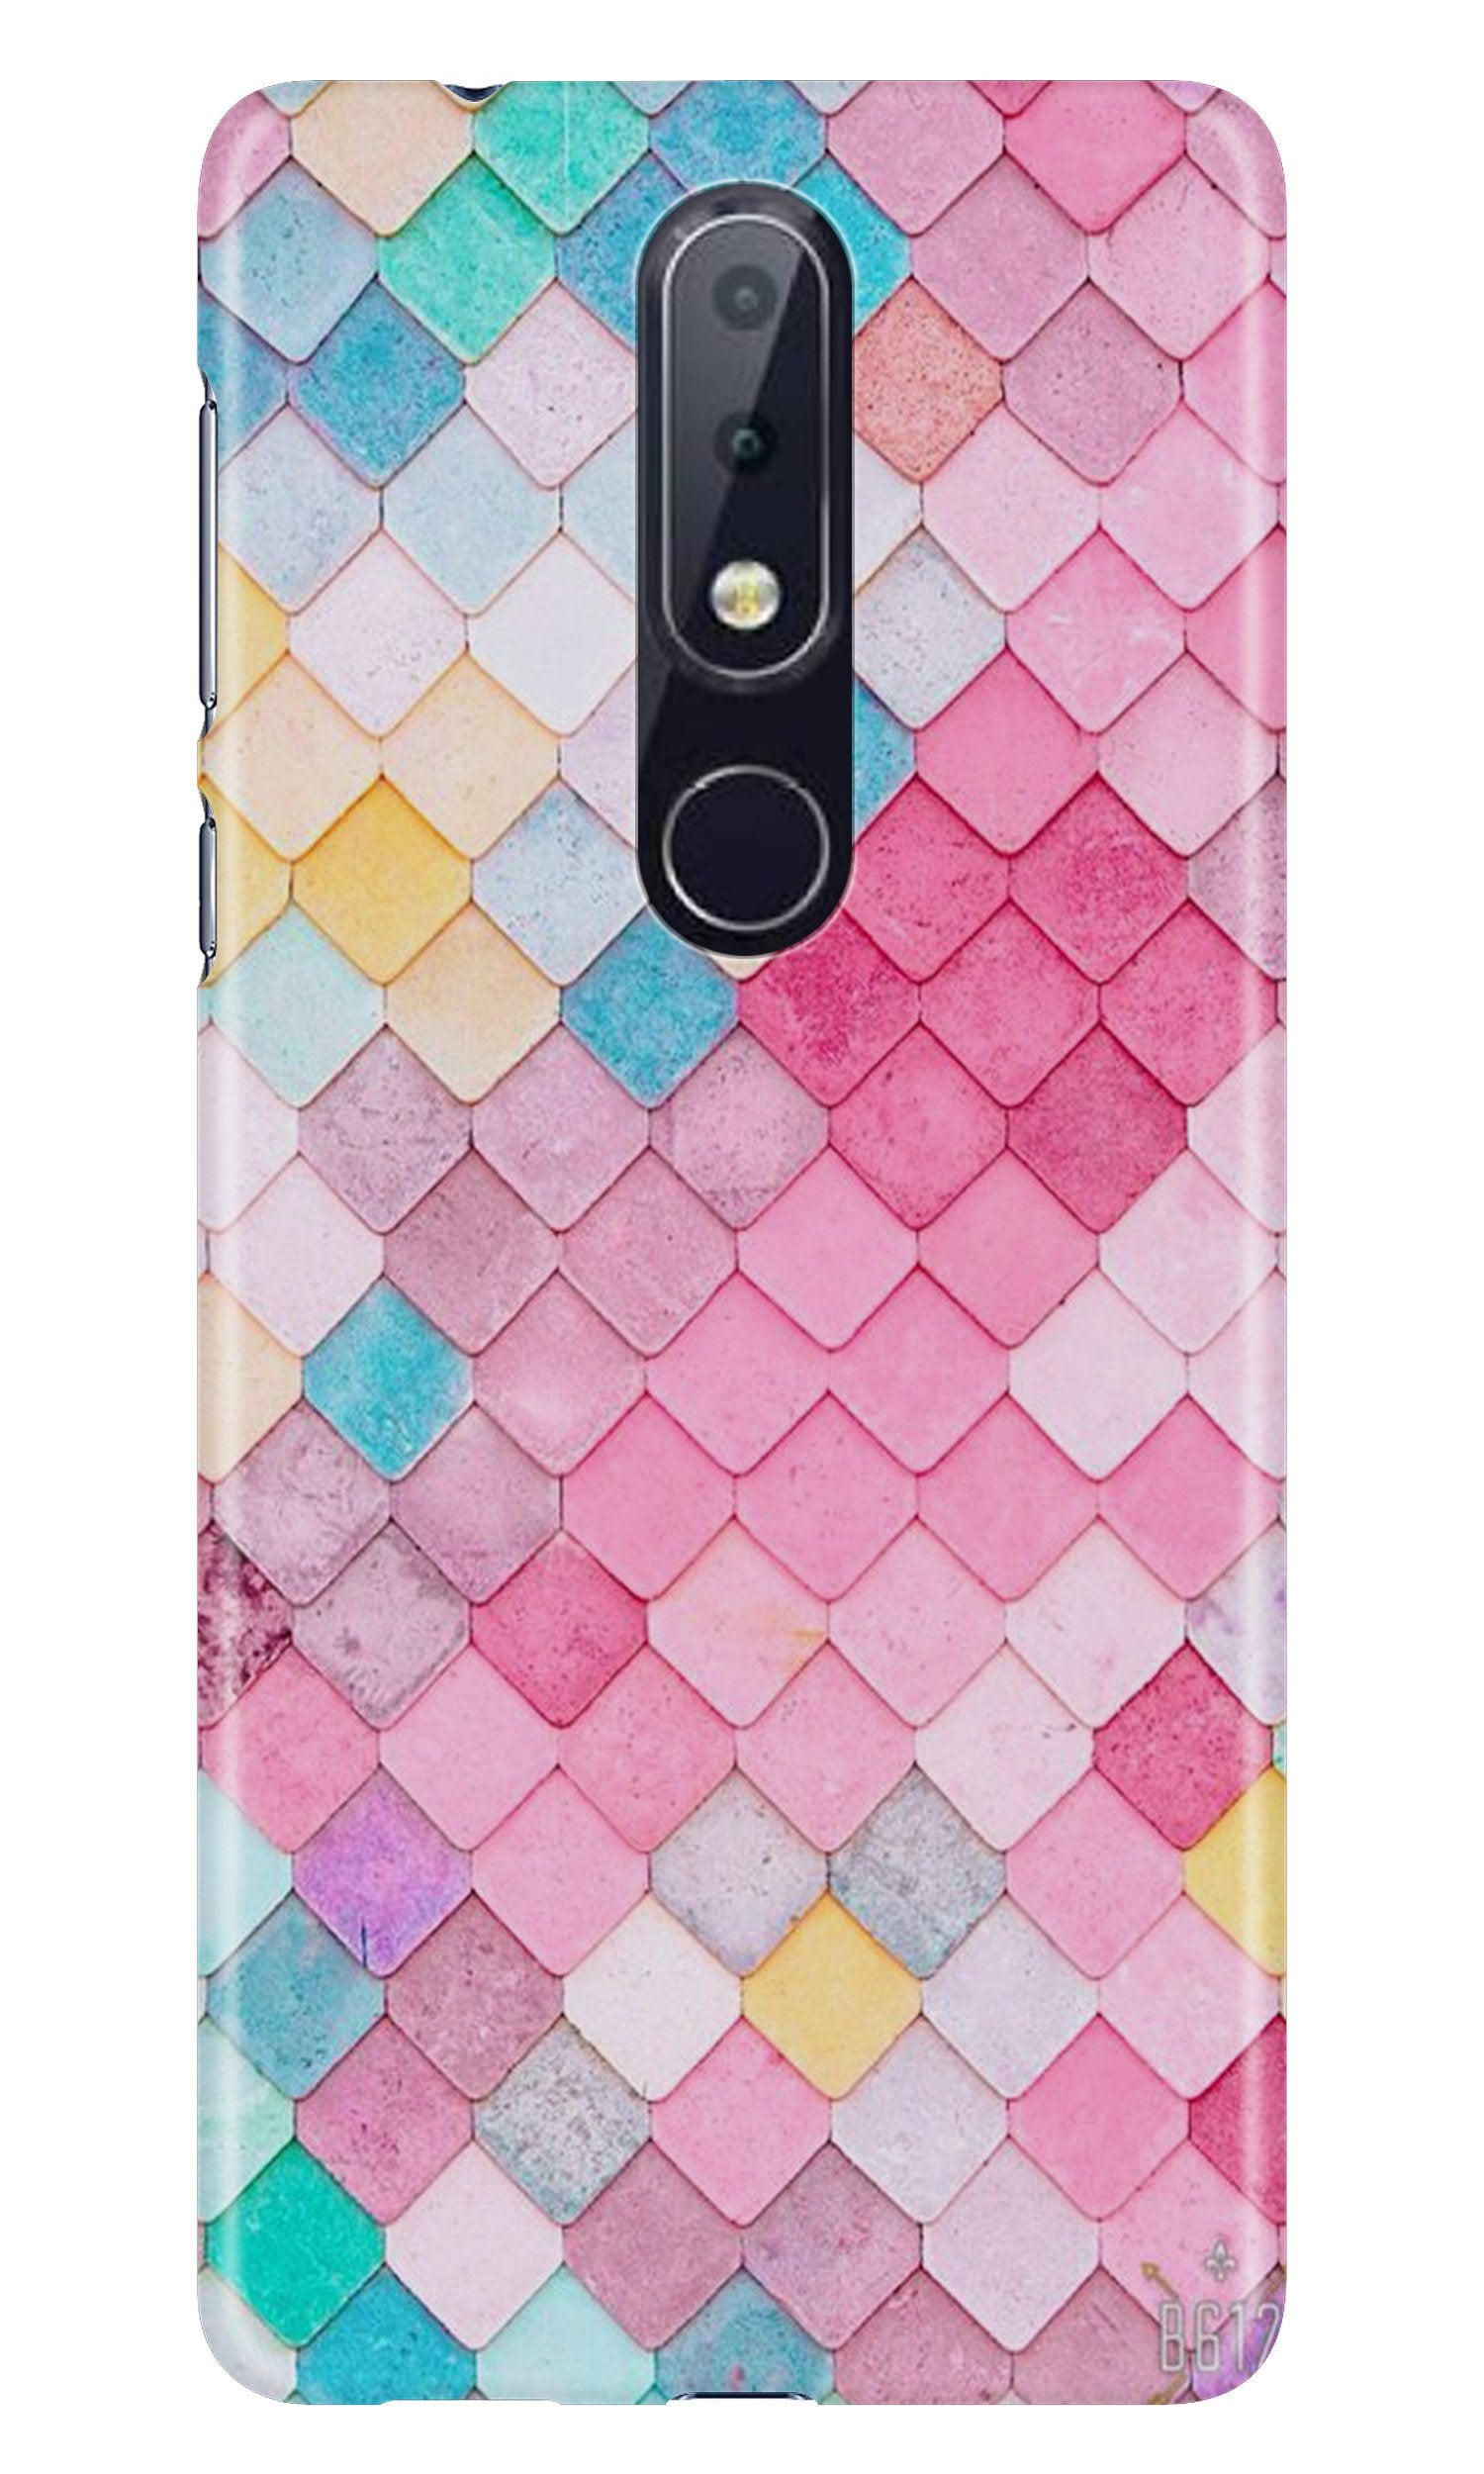 Pink Pattern Case for Nokia 6.1 Plus (Design No. 215)